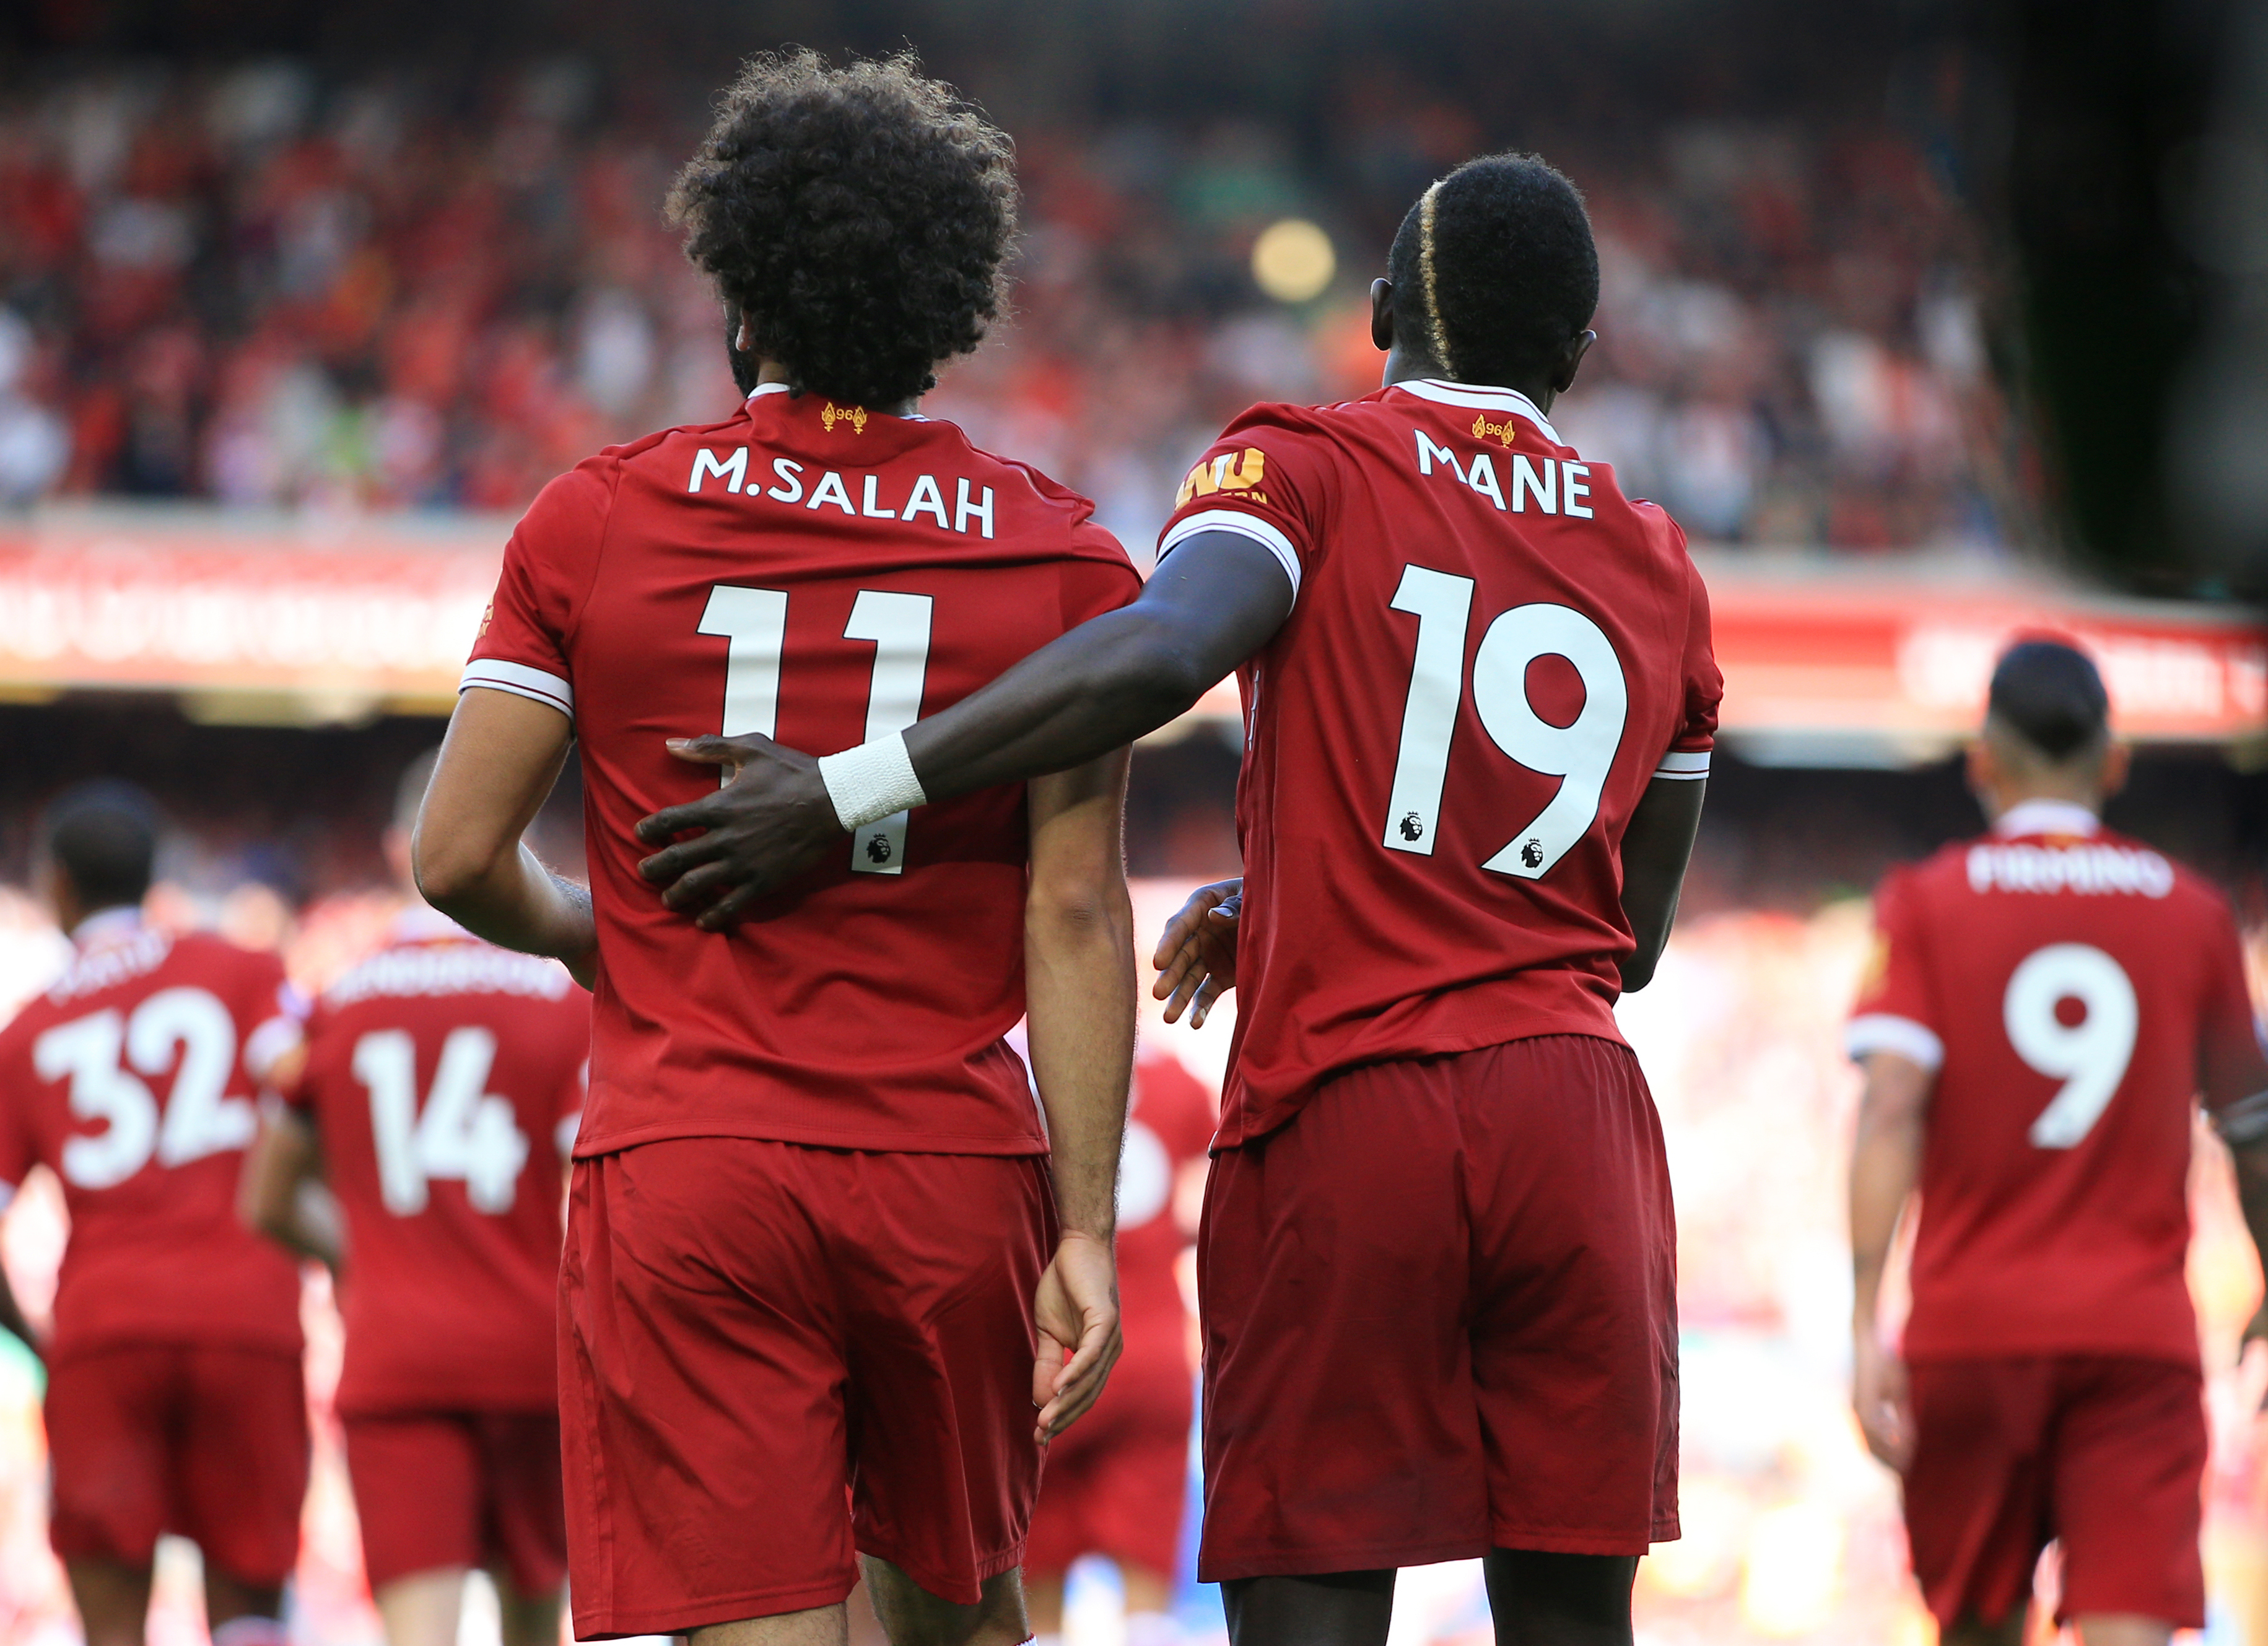 Liverpool players Mohamed Salah and Sadio Mane